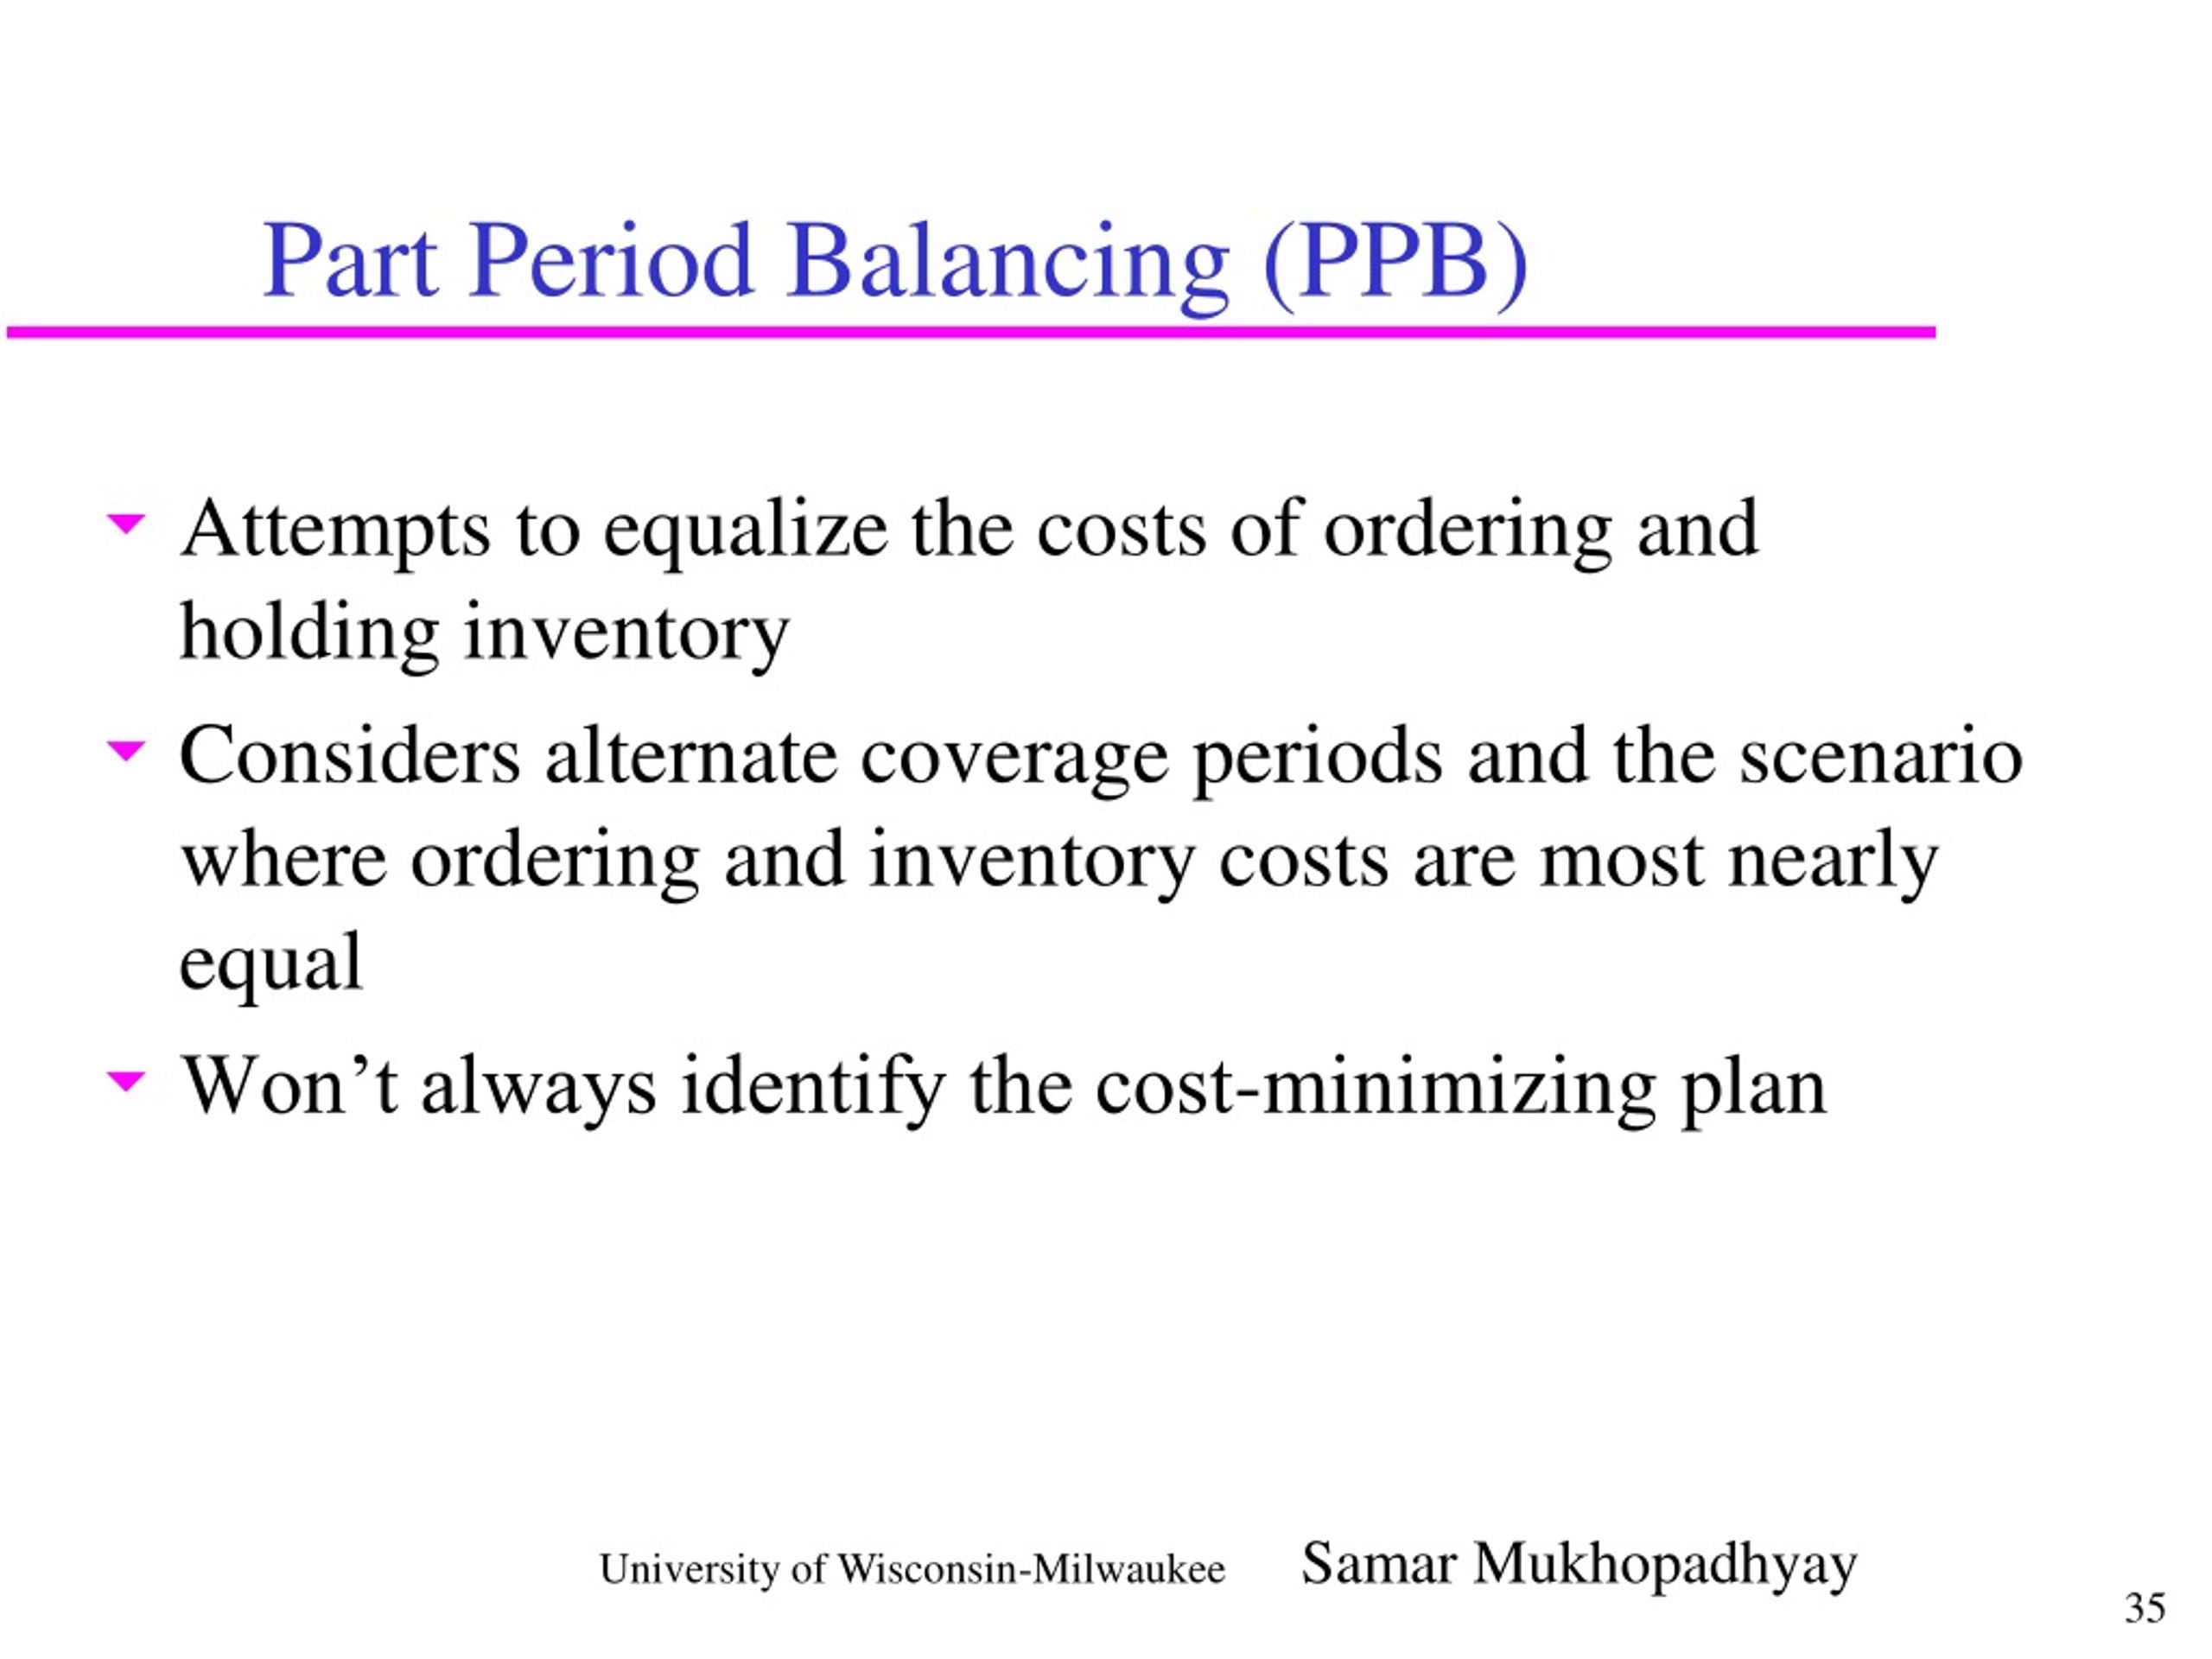 Part Period Balancing (PPB) - Definition, Formula & Examples